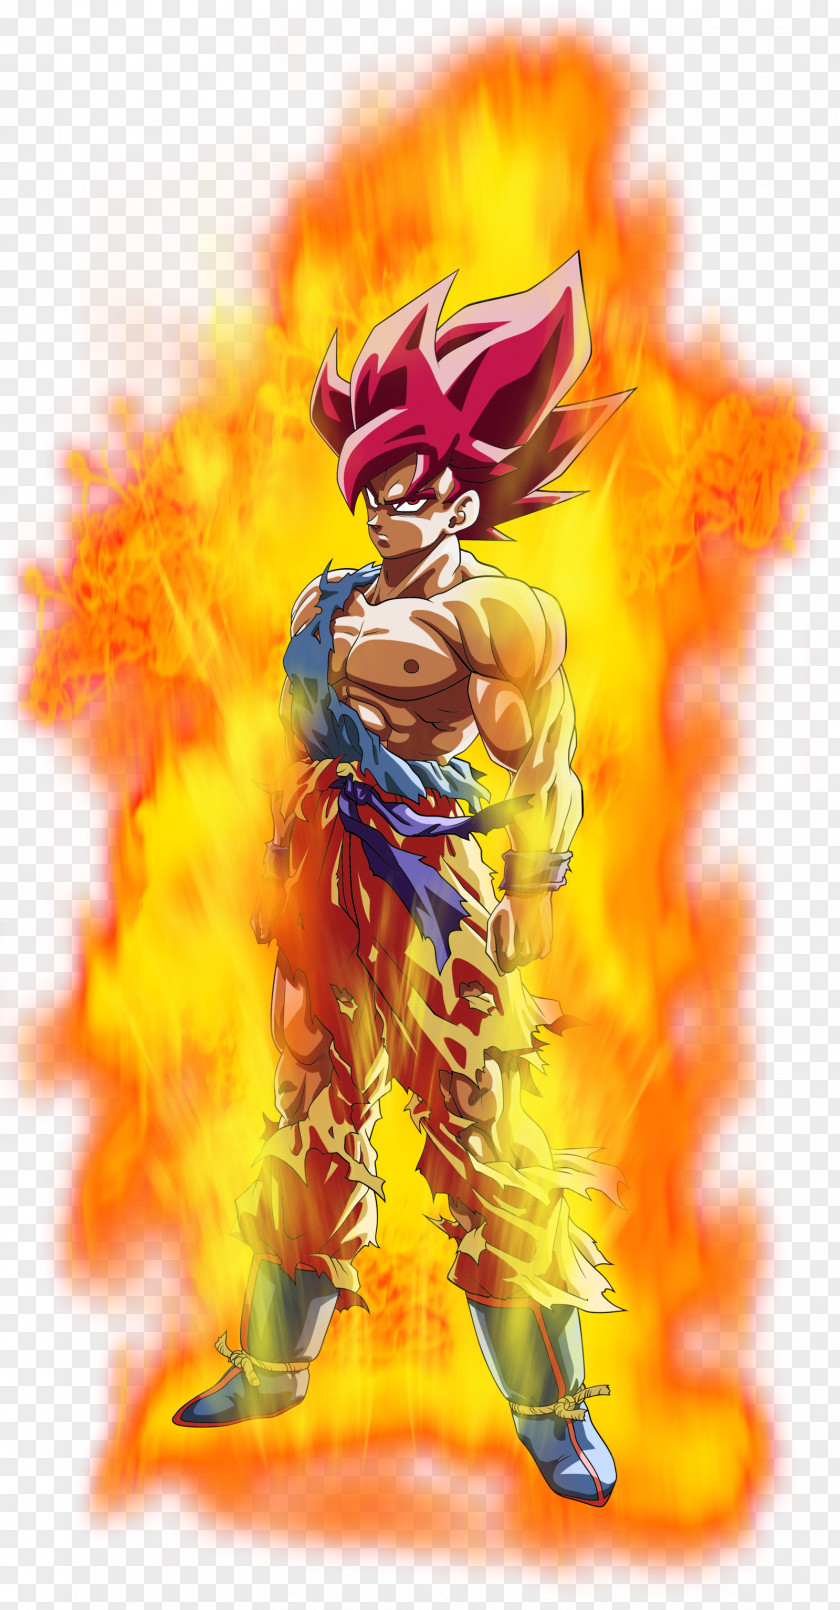 Super Saiyan Aura Goku Gohan Vegeta Dragon Ball FighterZ Krillin PNG